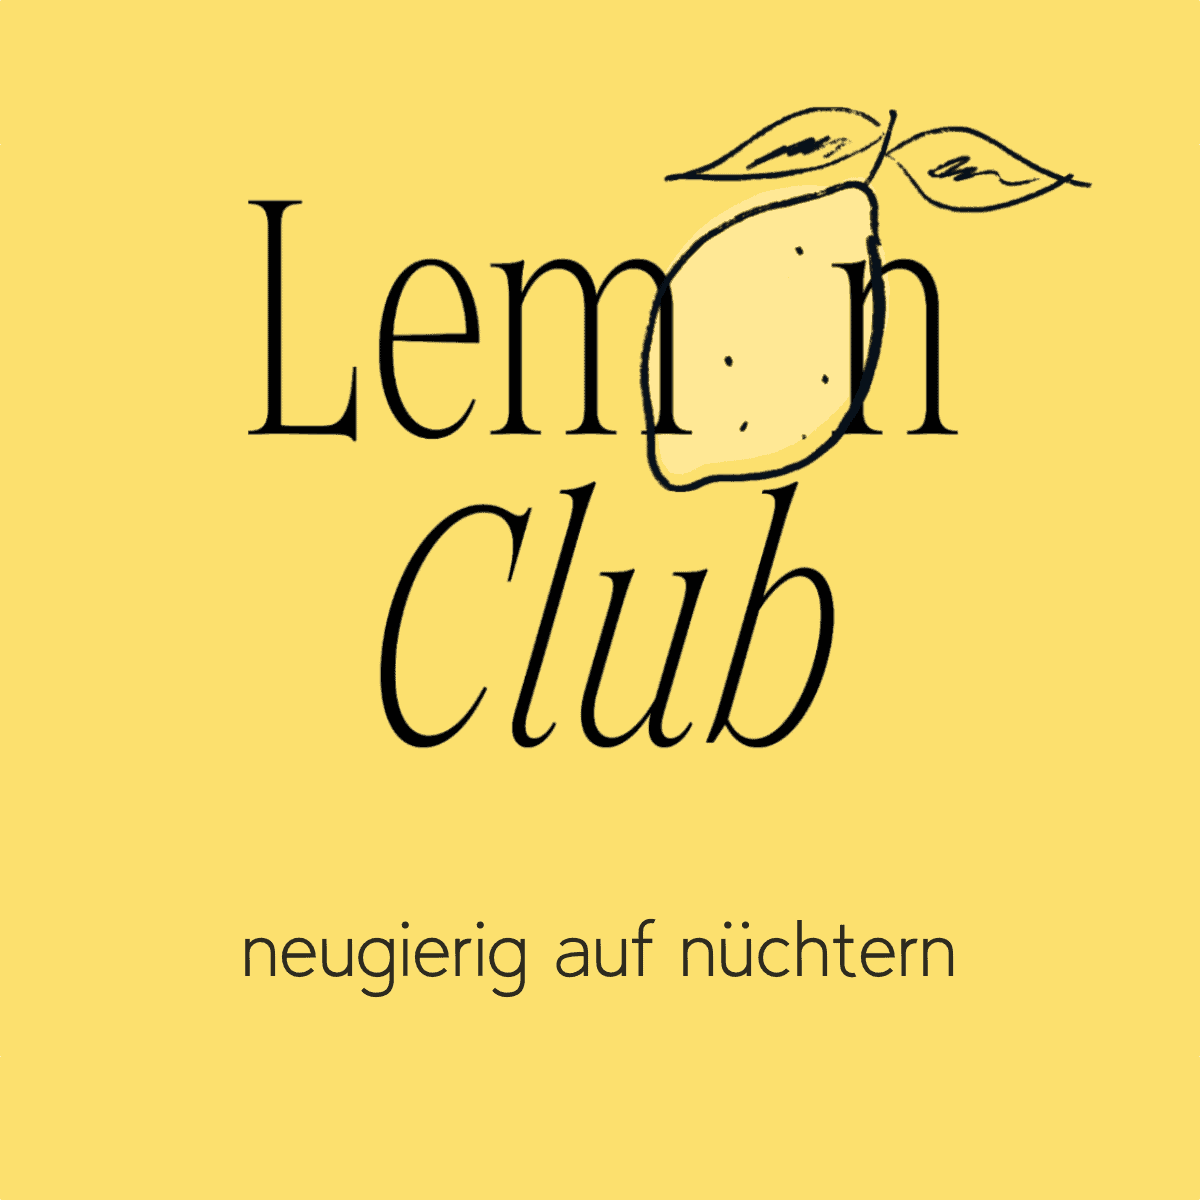 Lemon Club neugierig auf nüchtern